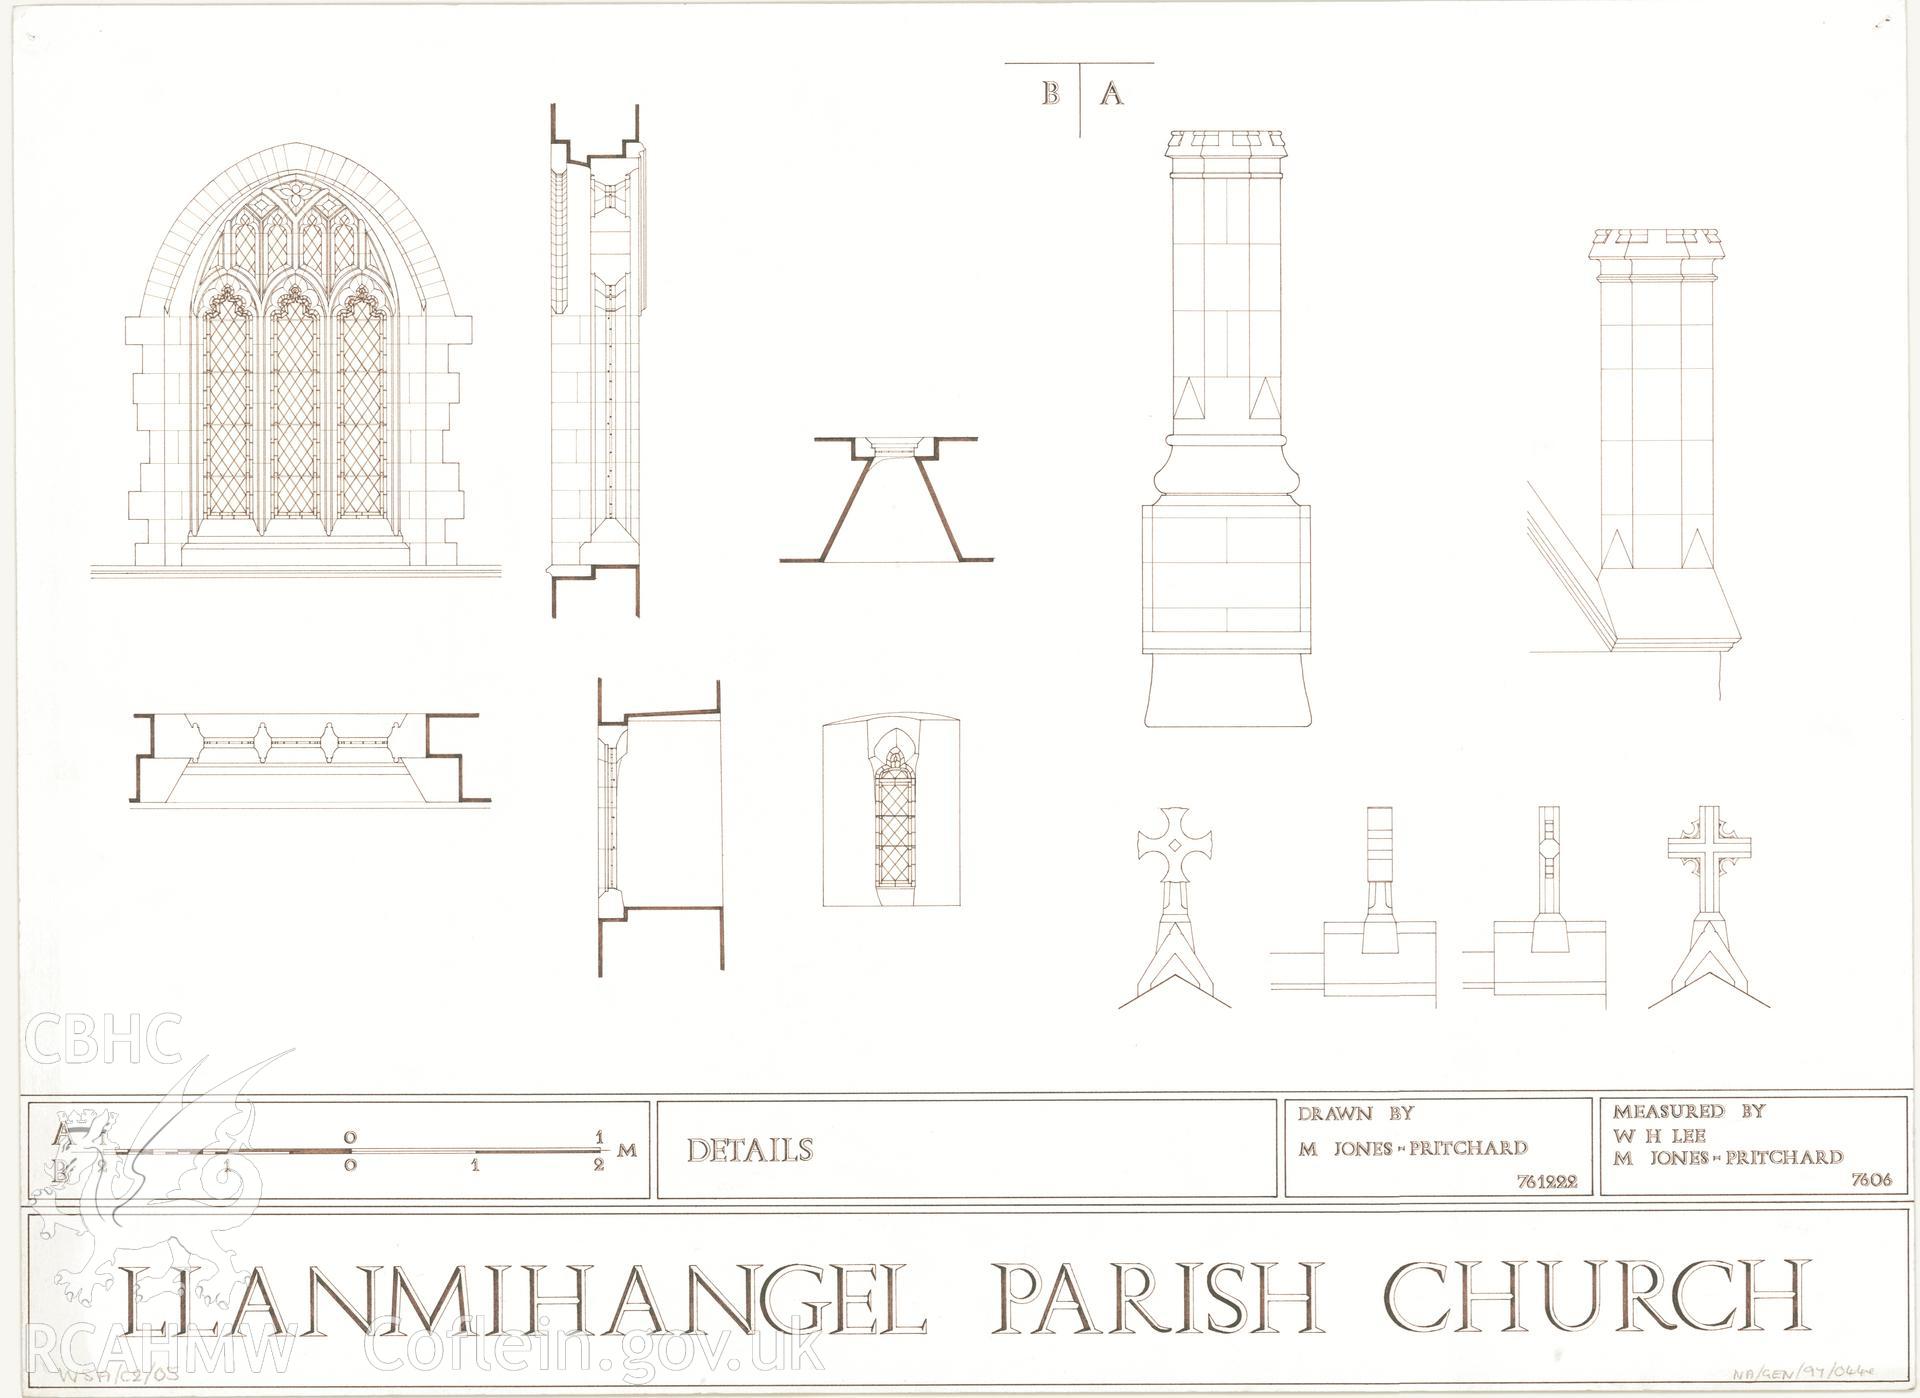 Measured drawing showing various detail at Llanmihangel Parish Church, produced by M. Jones-Pritchard and W.H. Lee, 1976.